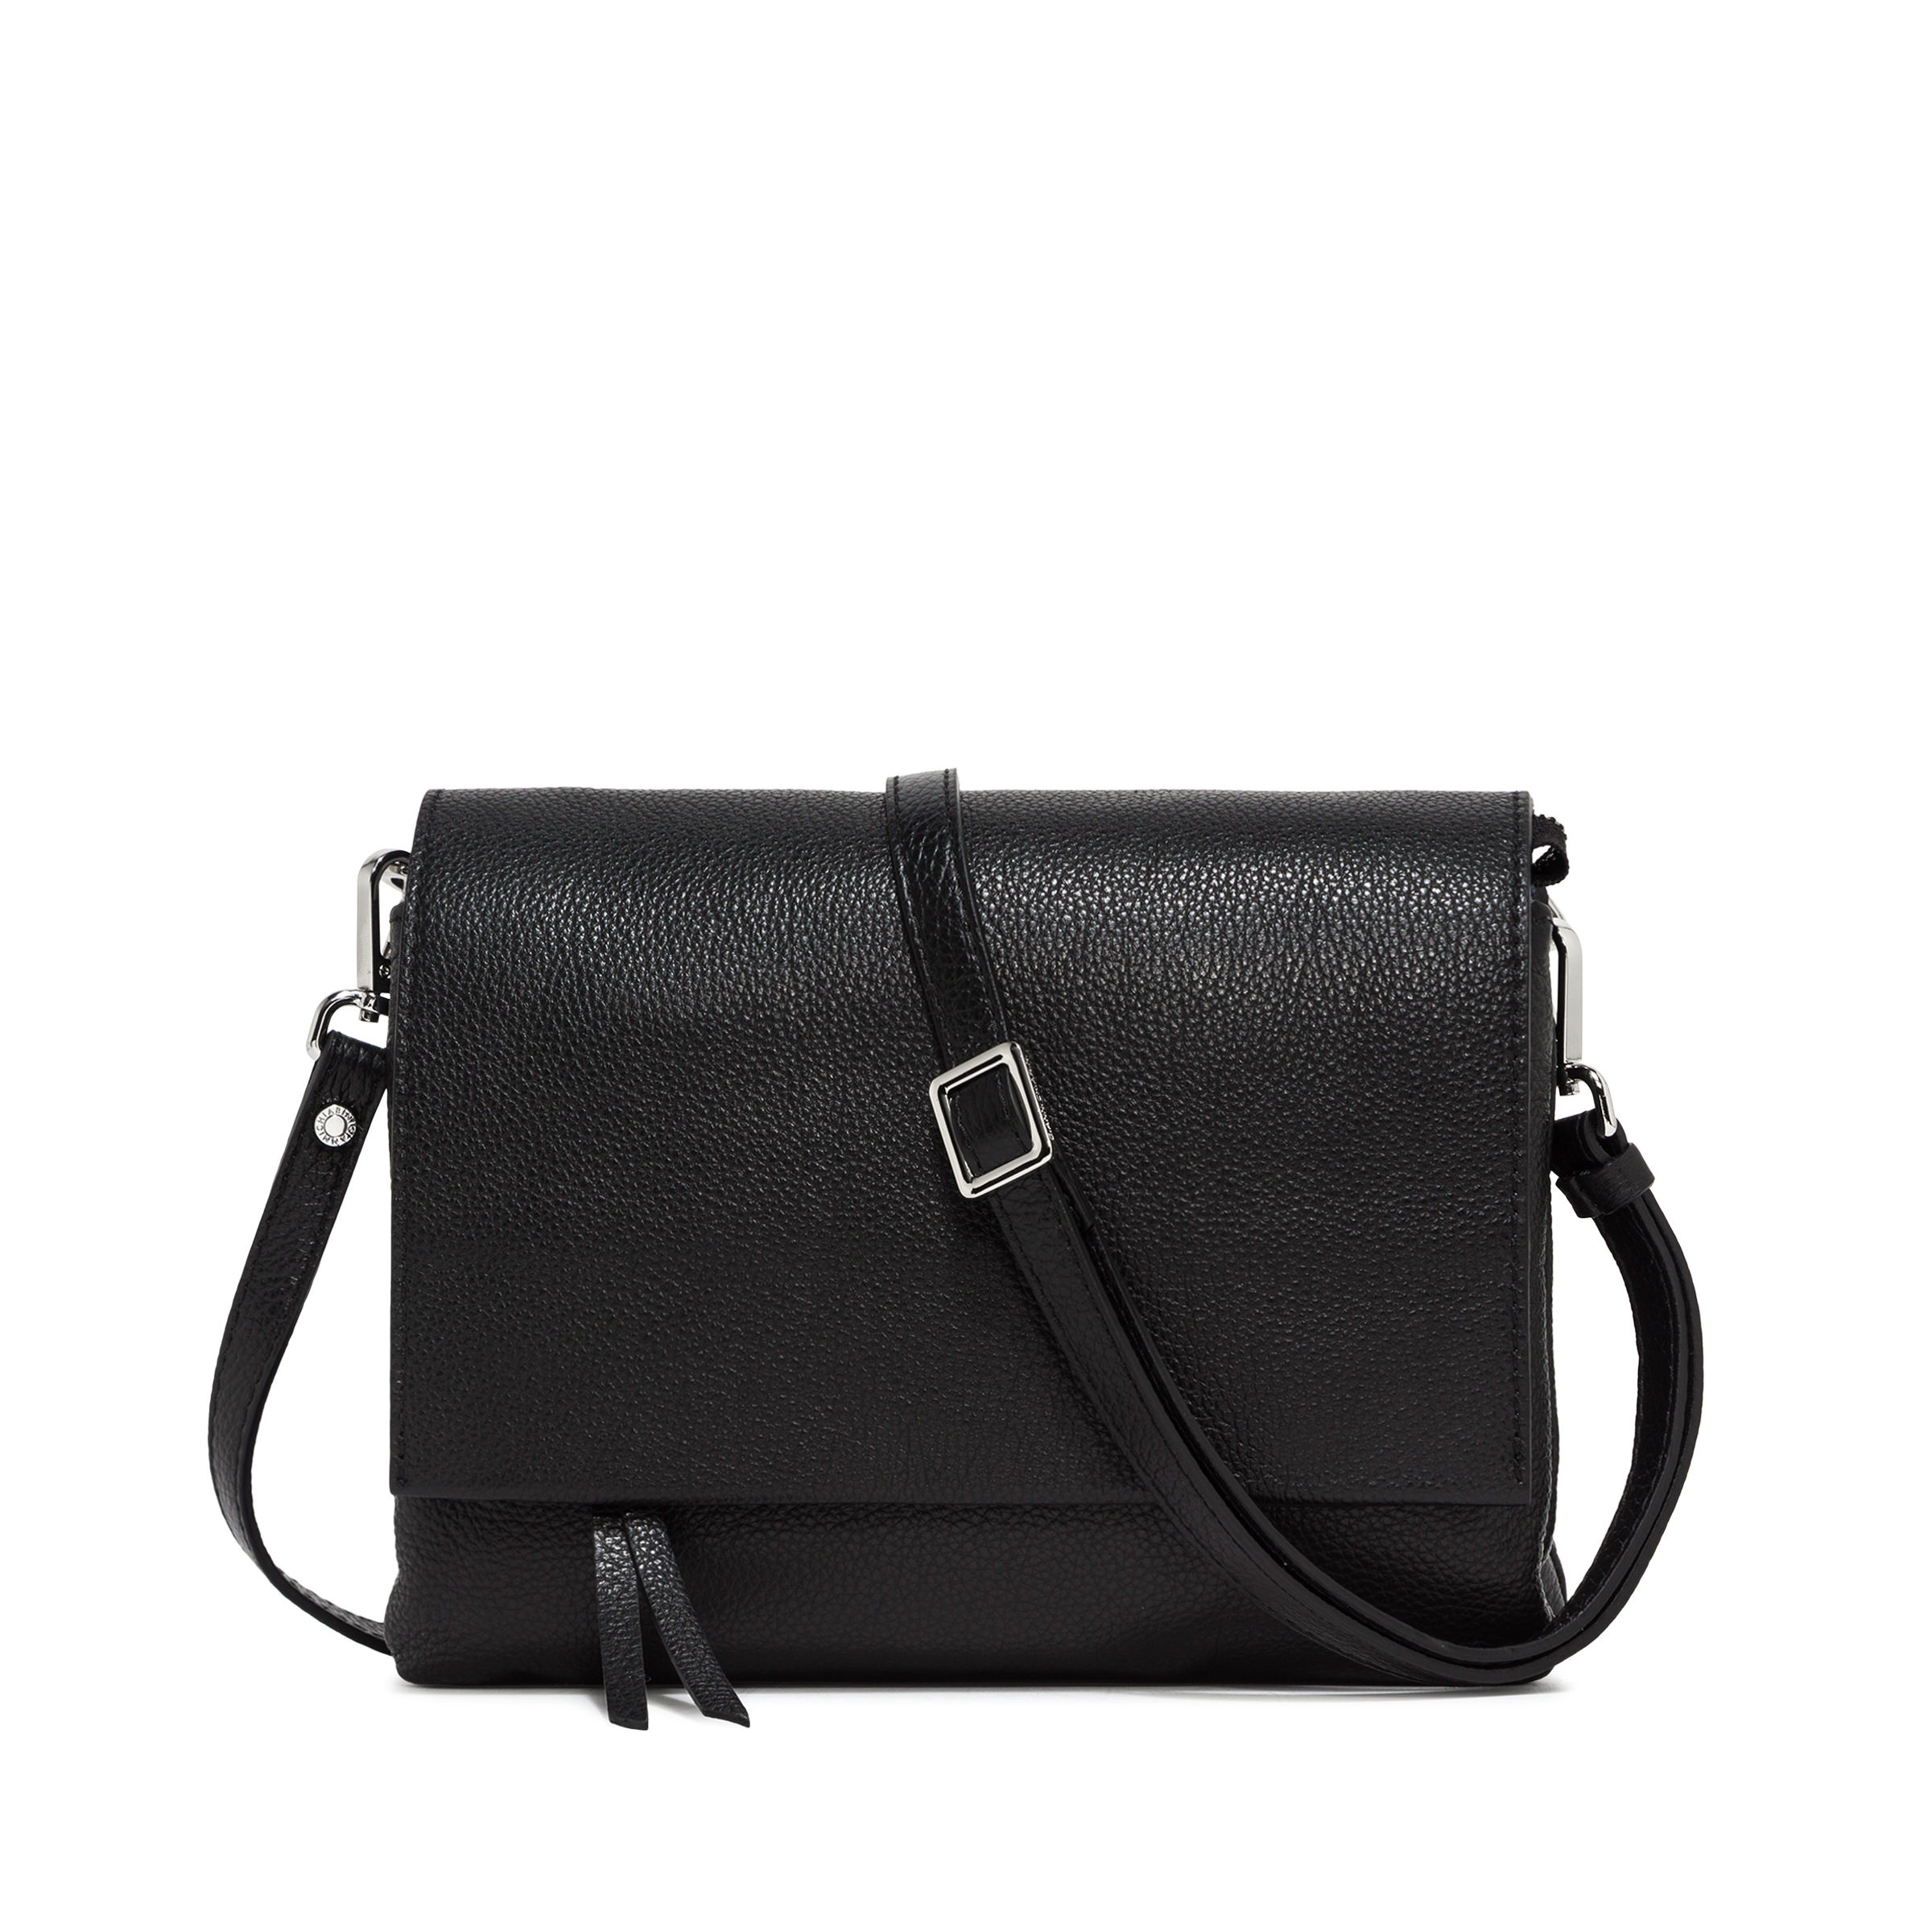 Gianni Chiarini - Three leather bag, Black, large image number 0